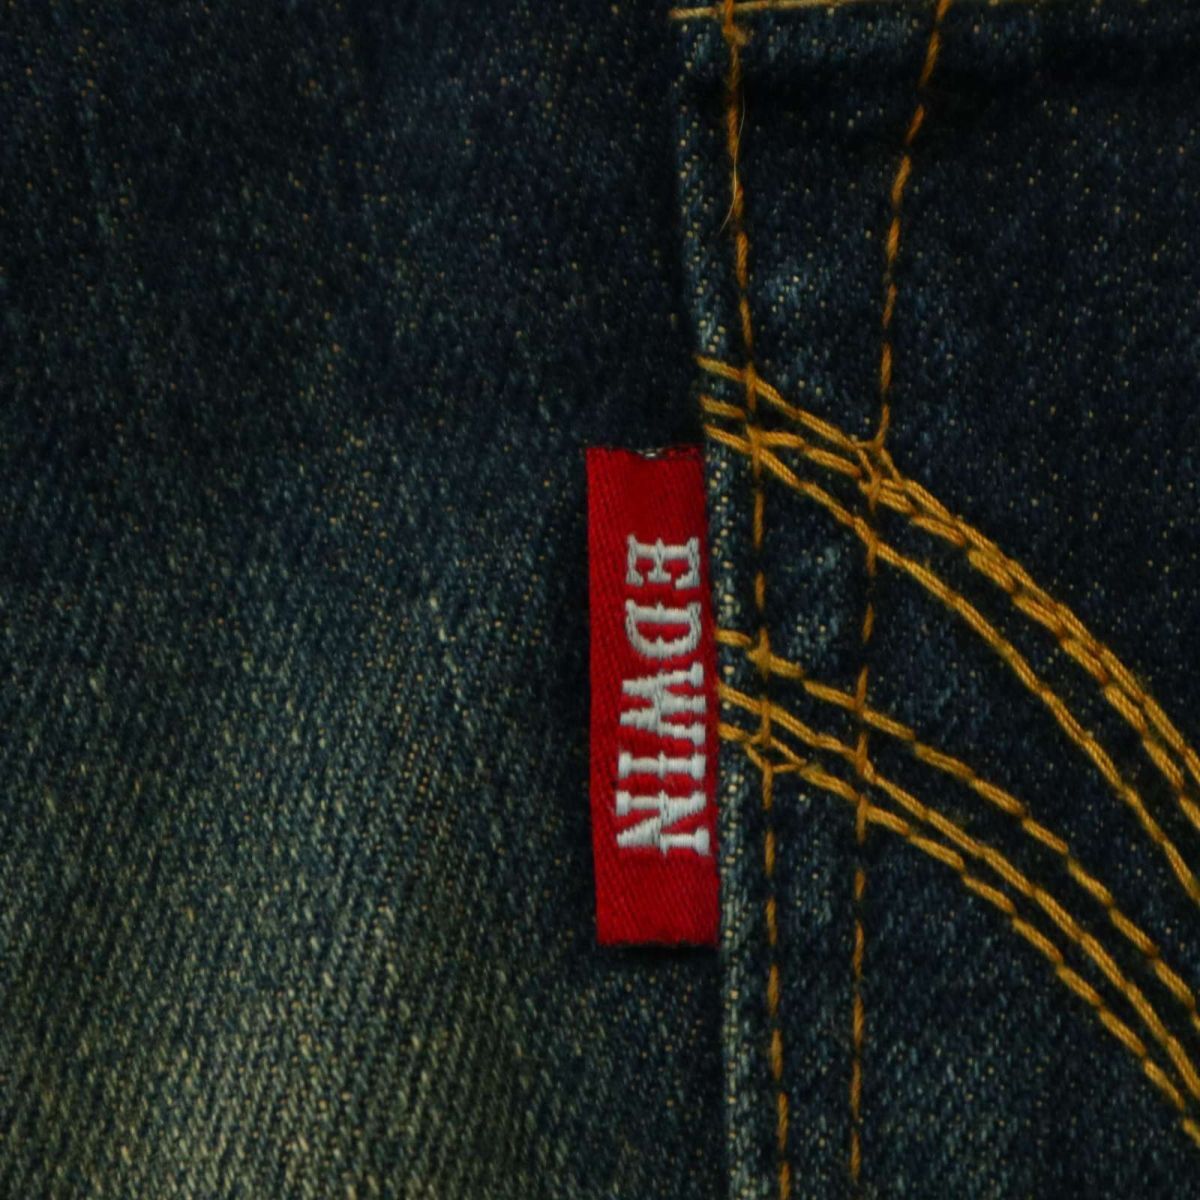 EDWIN Edwin EX405 XV STANDARD* через год USED обработка Denim брюки джинсы Sz.33 мужской сделано в Японии A4B01941_4#R